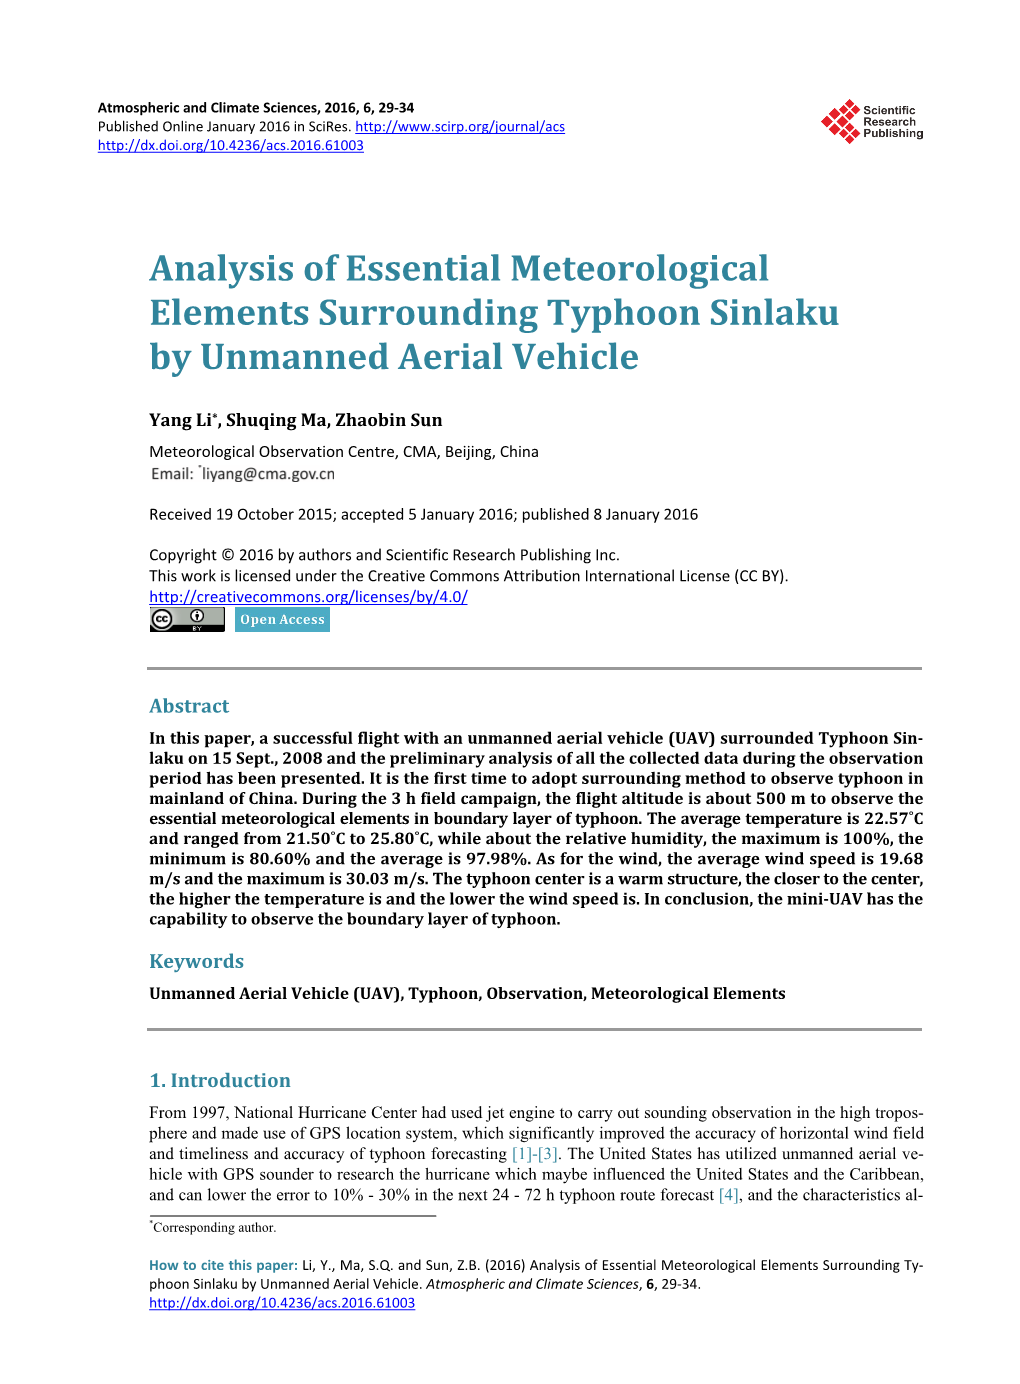 Analysis of Essential Meteorological Elements Surrounding Typhoon Sinlaku by Unmanned Aerial Vehicle